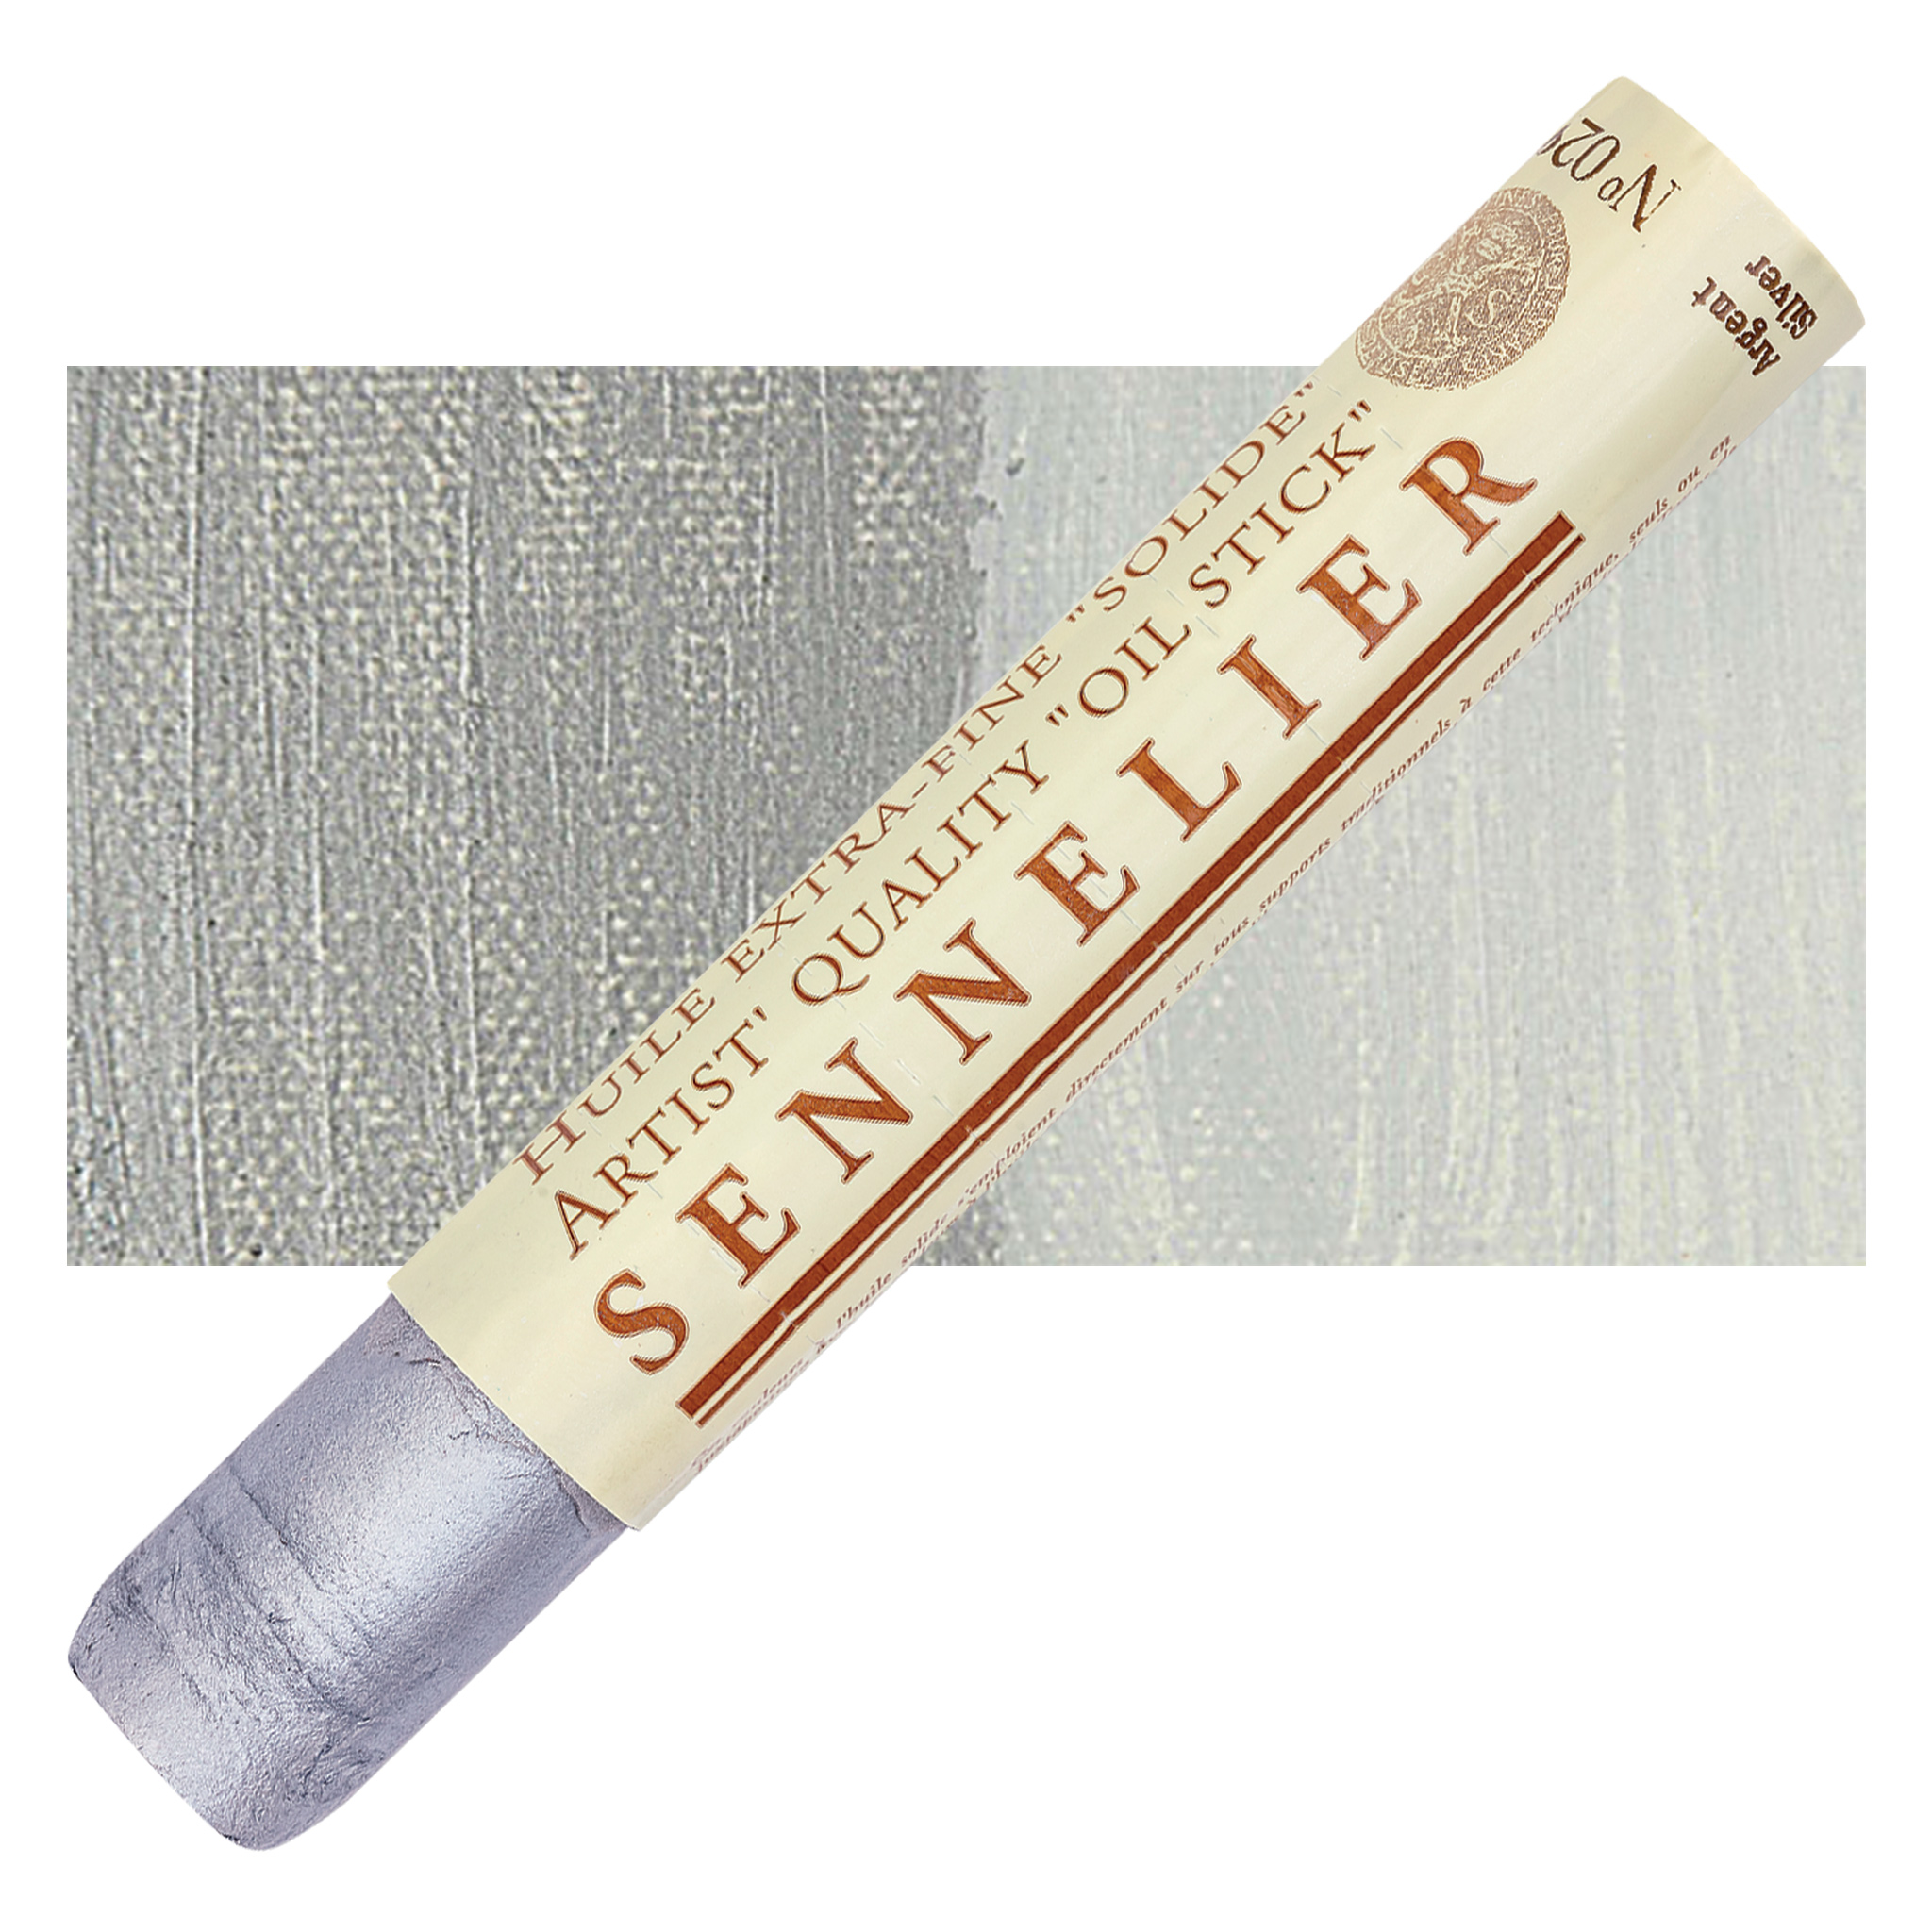 Sennelier Extra-Fine Oil Sticks, 50,000+ Art Supplies